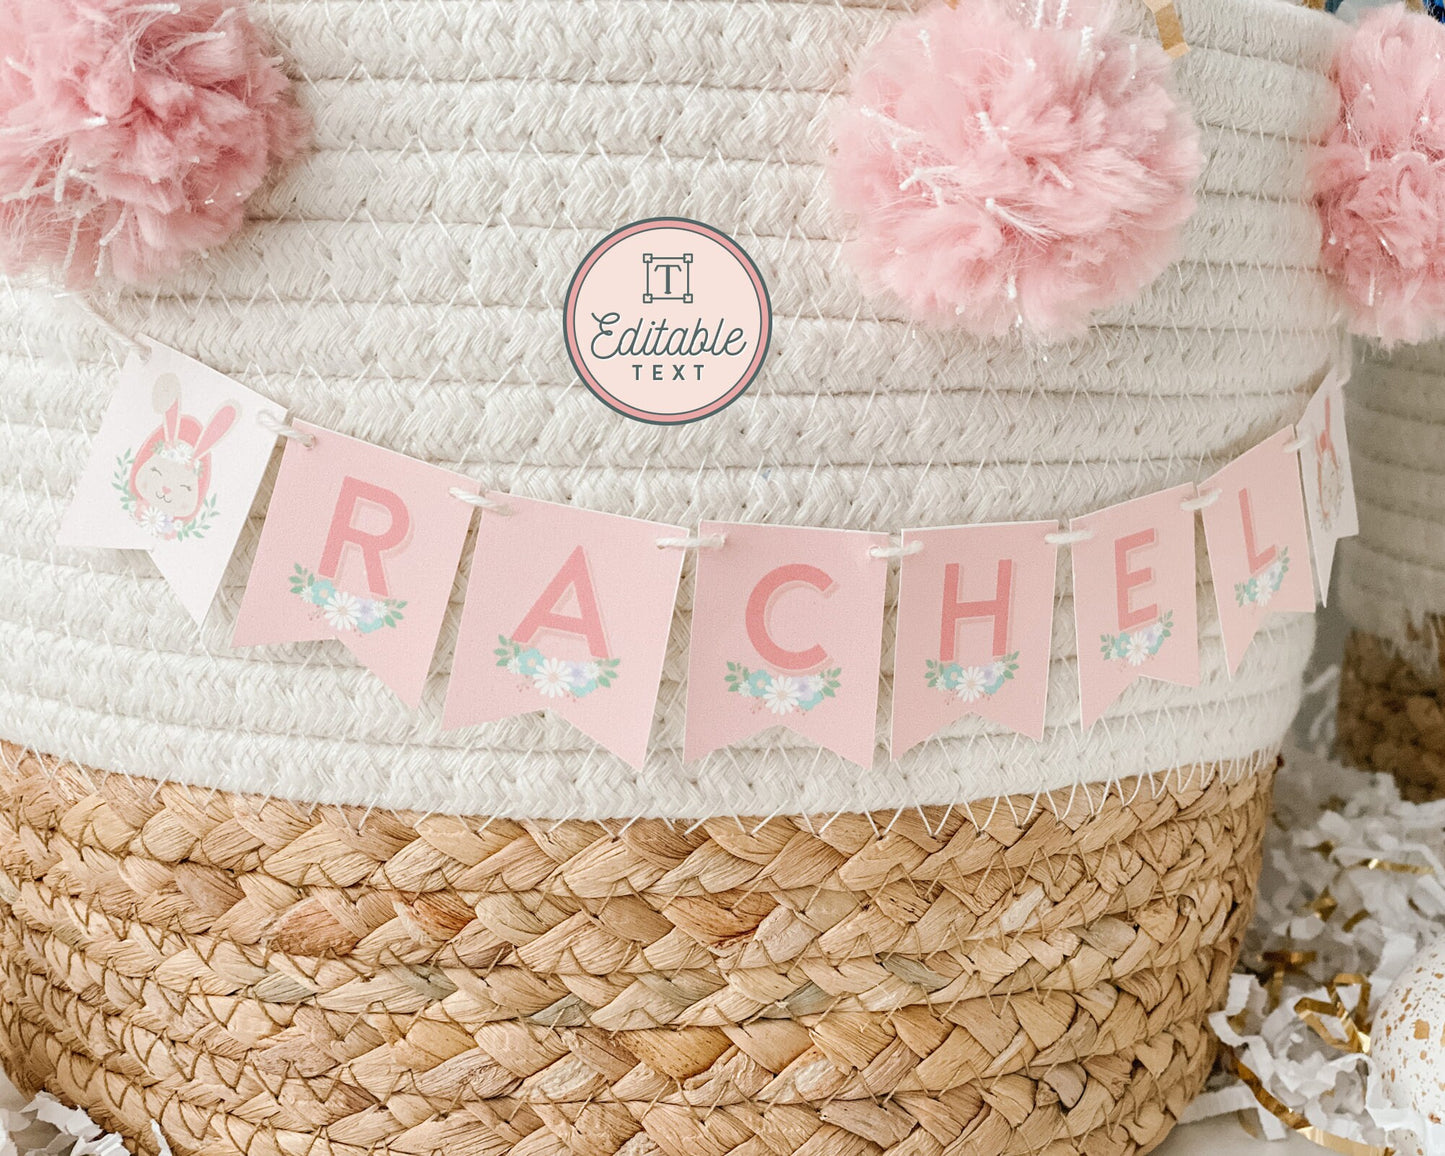 Personalized Easter Basket Name Tags  || Custom Printable Easter Basket Name Banner || Girl & Boy Easter Name Tags || Bunny Kisses || EA01